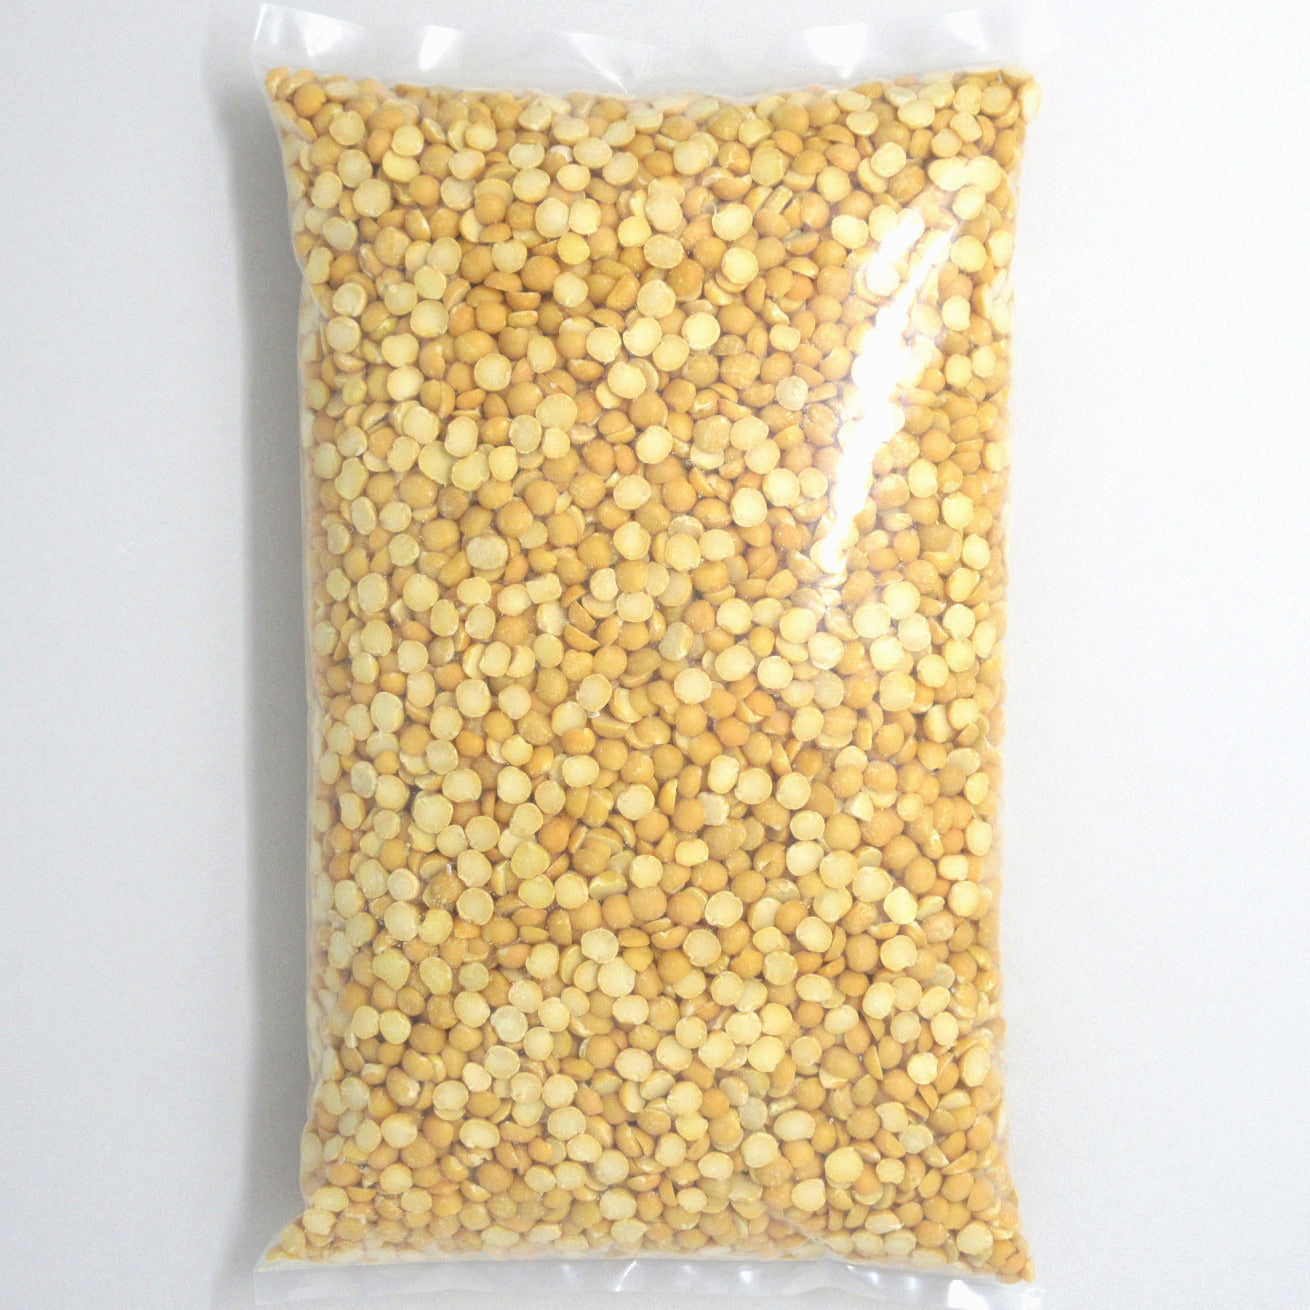 Flour Barrel product image - Split Yellow Peas